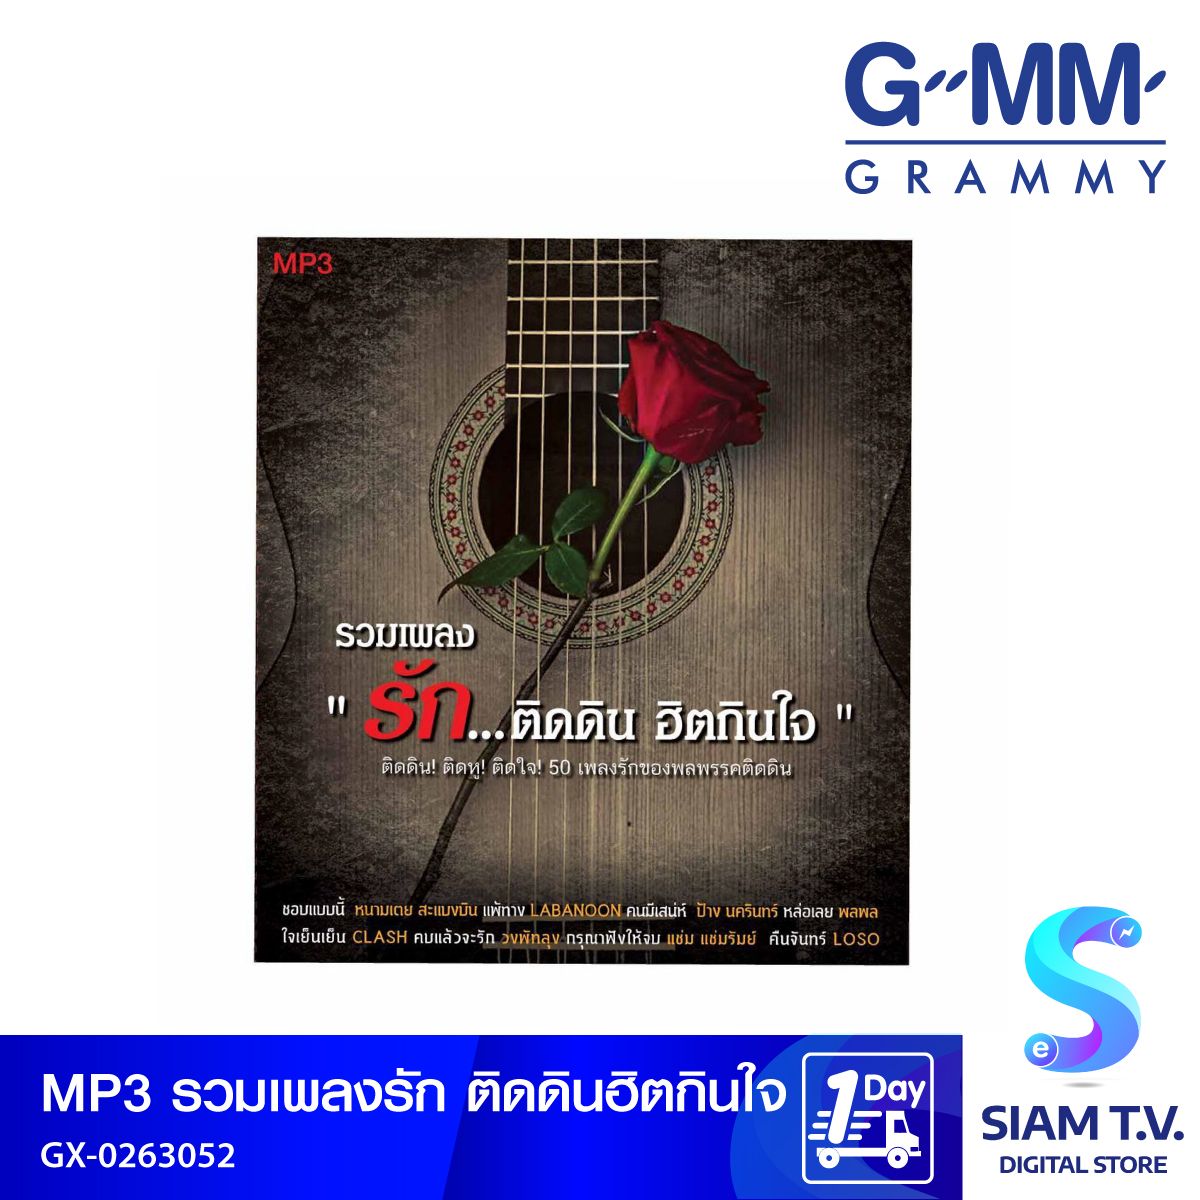 GMM GRAMMY MP3รวมเพลงรักติดดิน ฮิตติดใจ